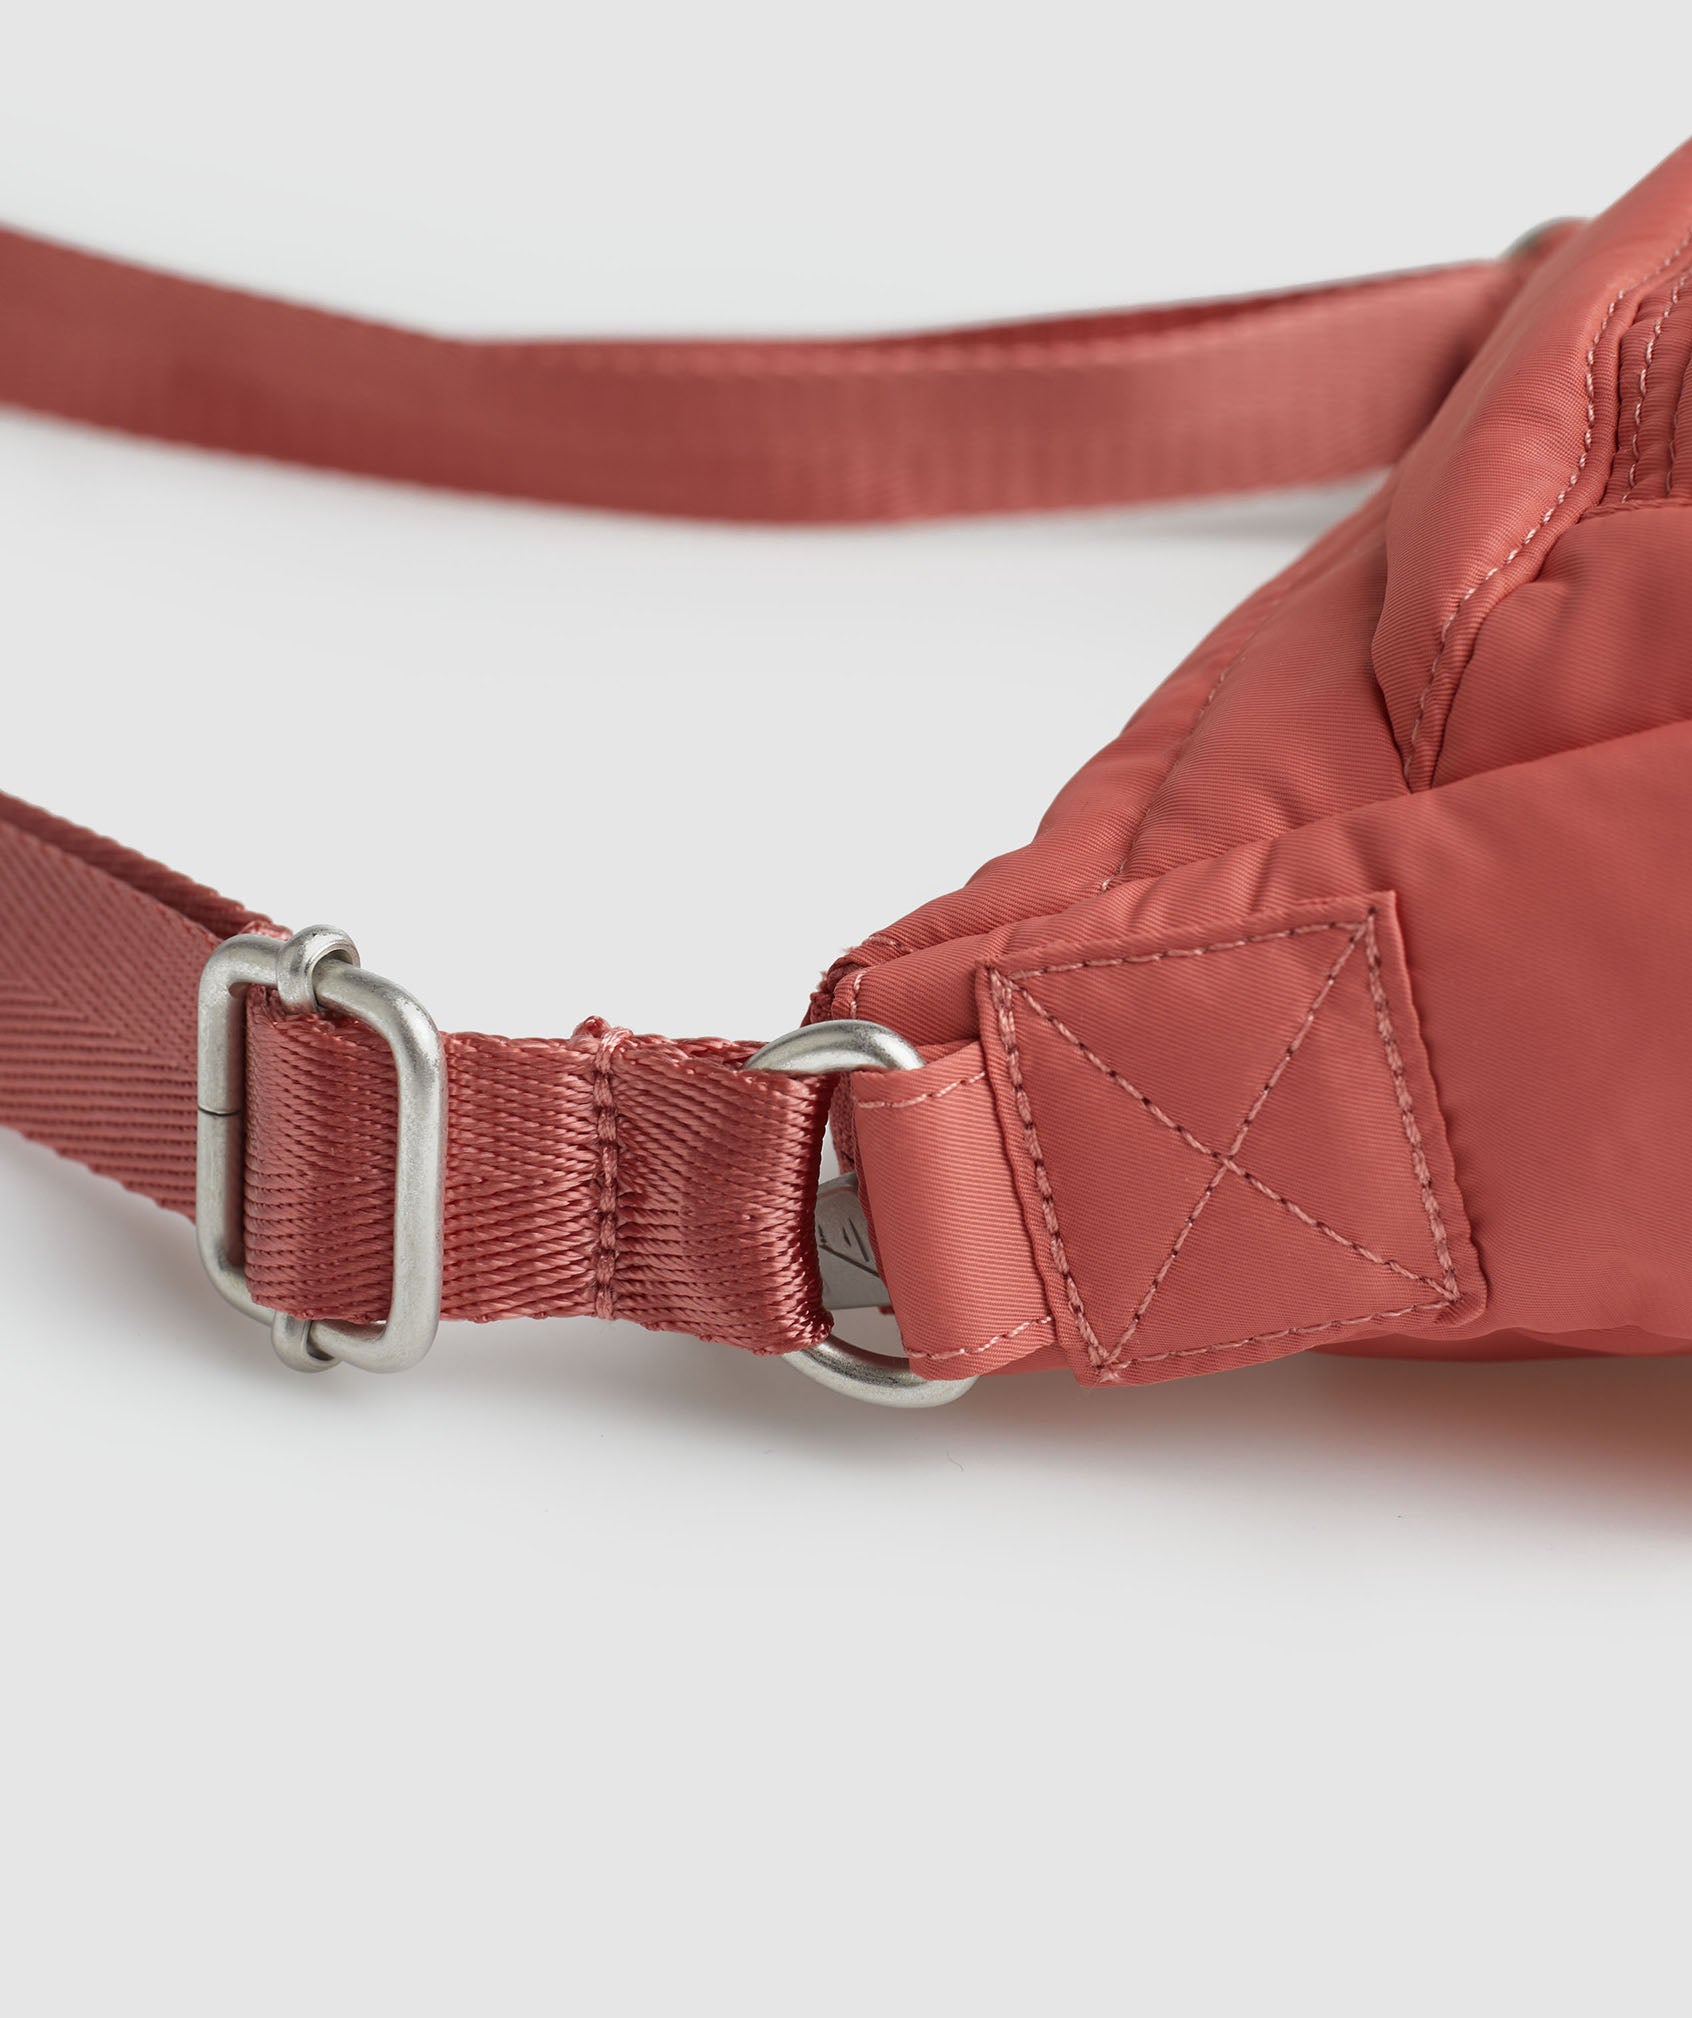 Premium Lifestyle Shoulder Bag in Terracotta Pink - view 4